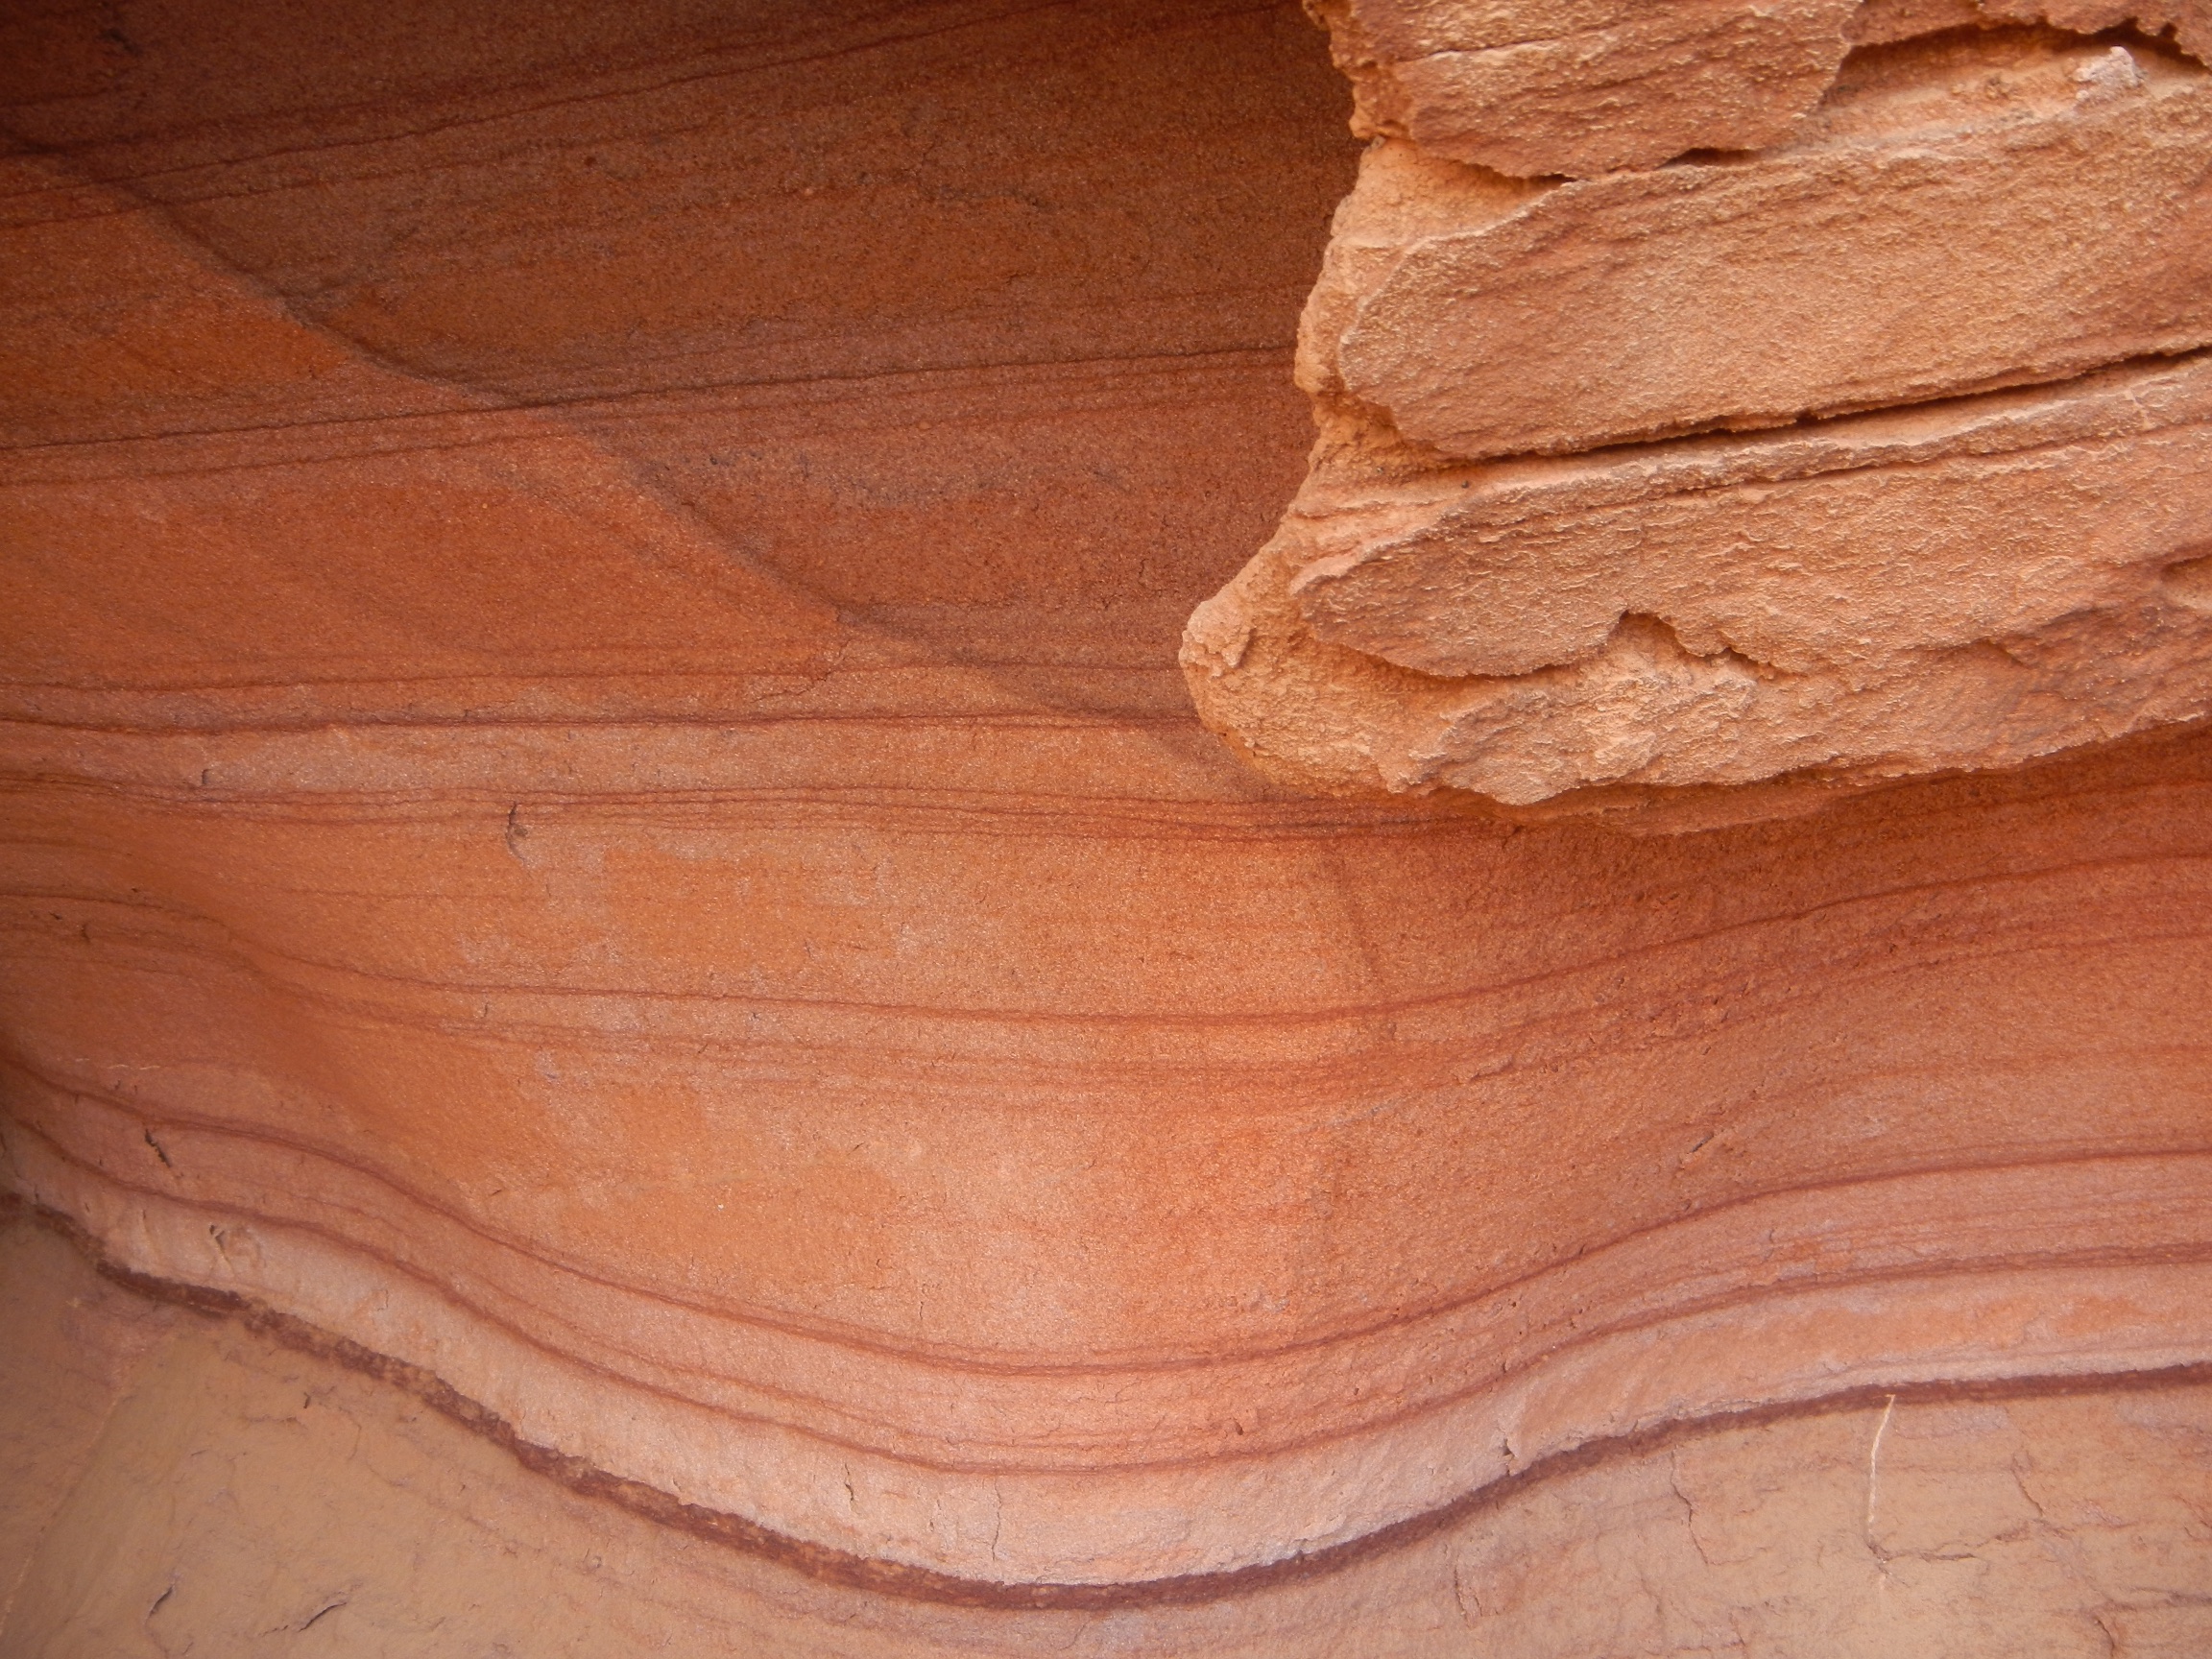  Rock formations, Wadi Rum 